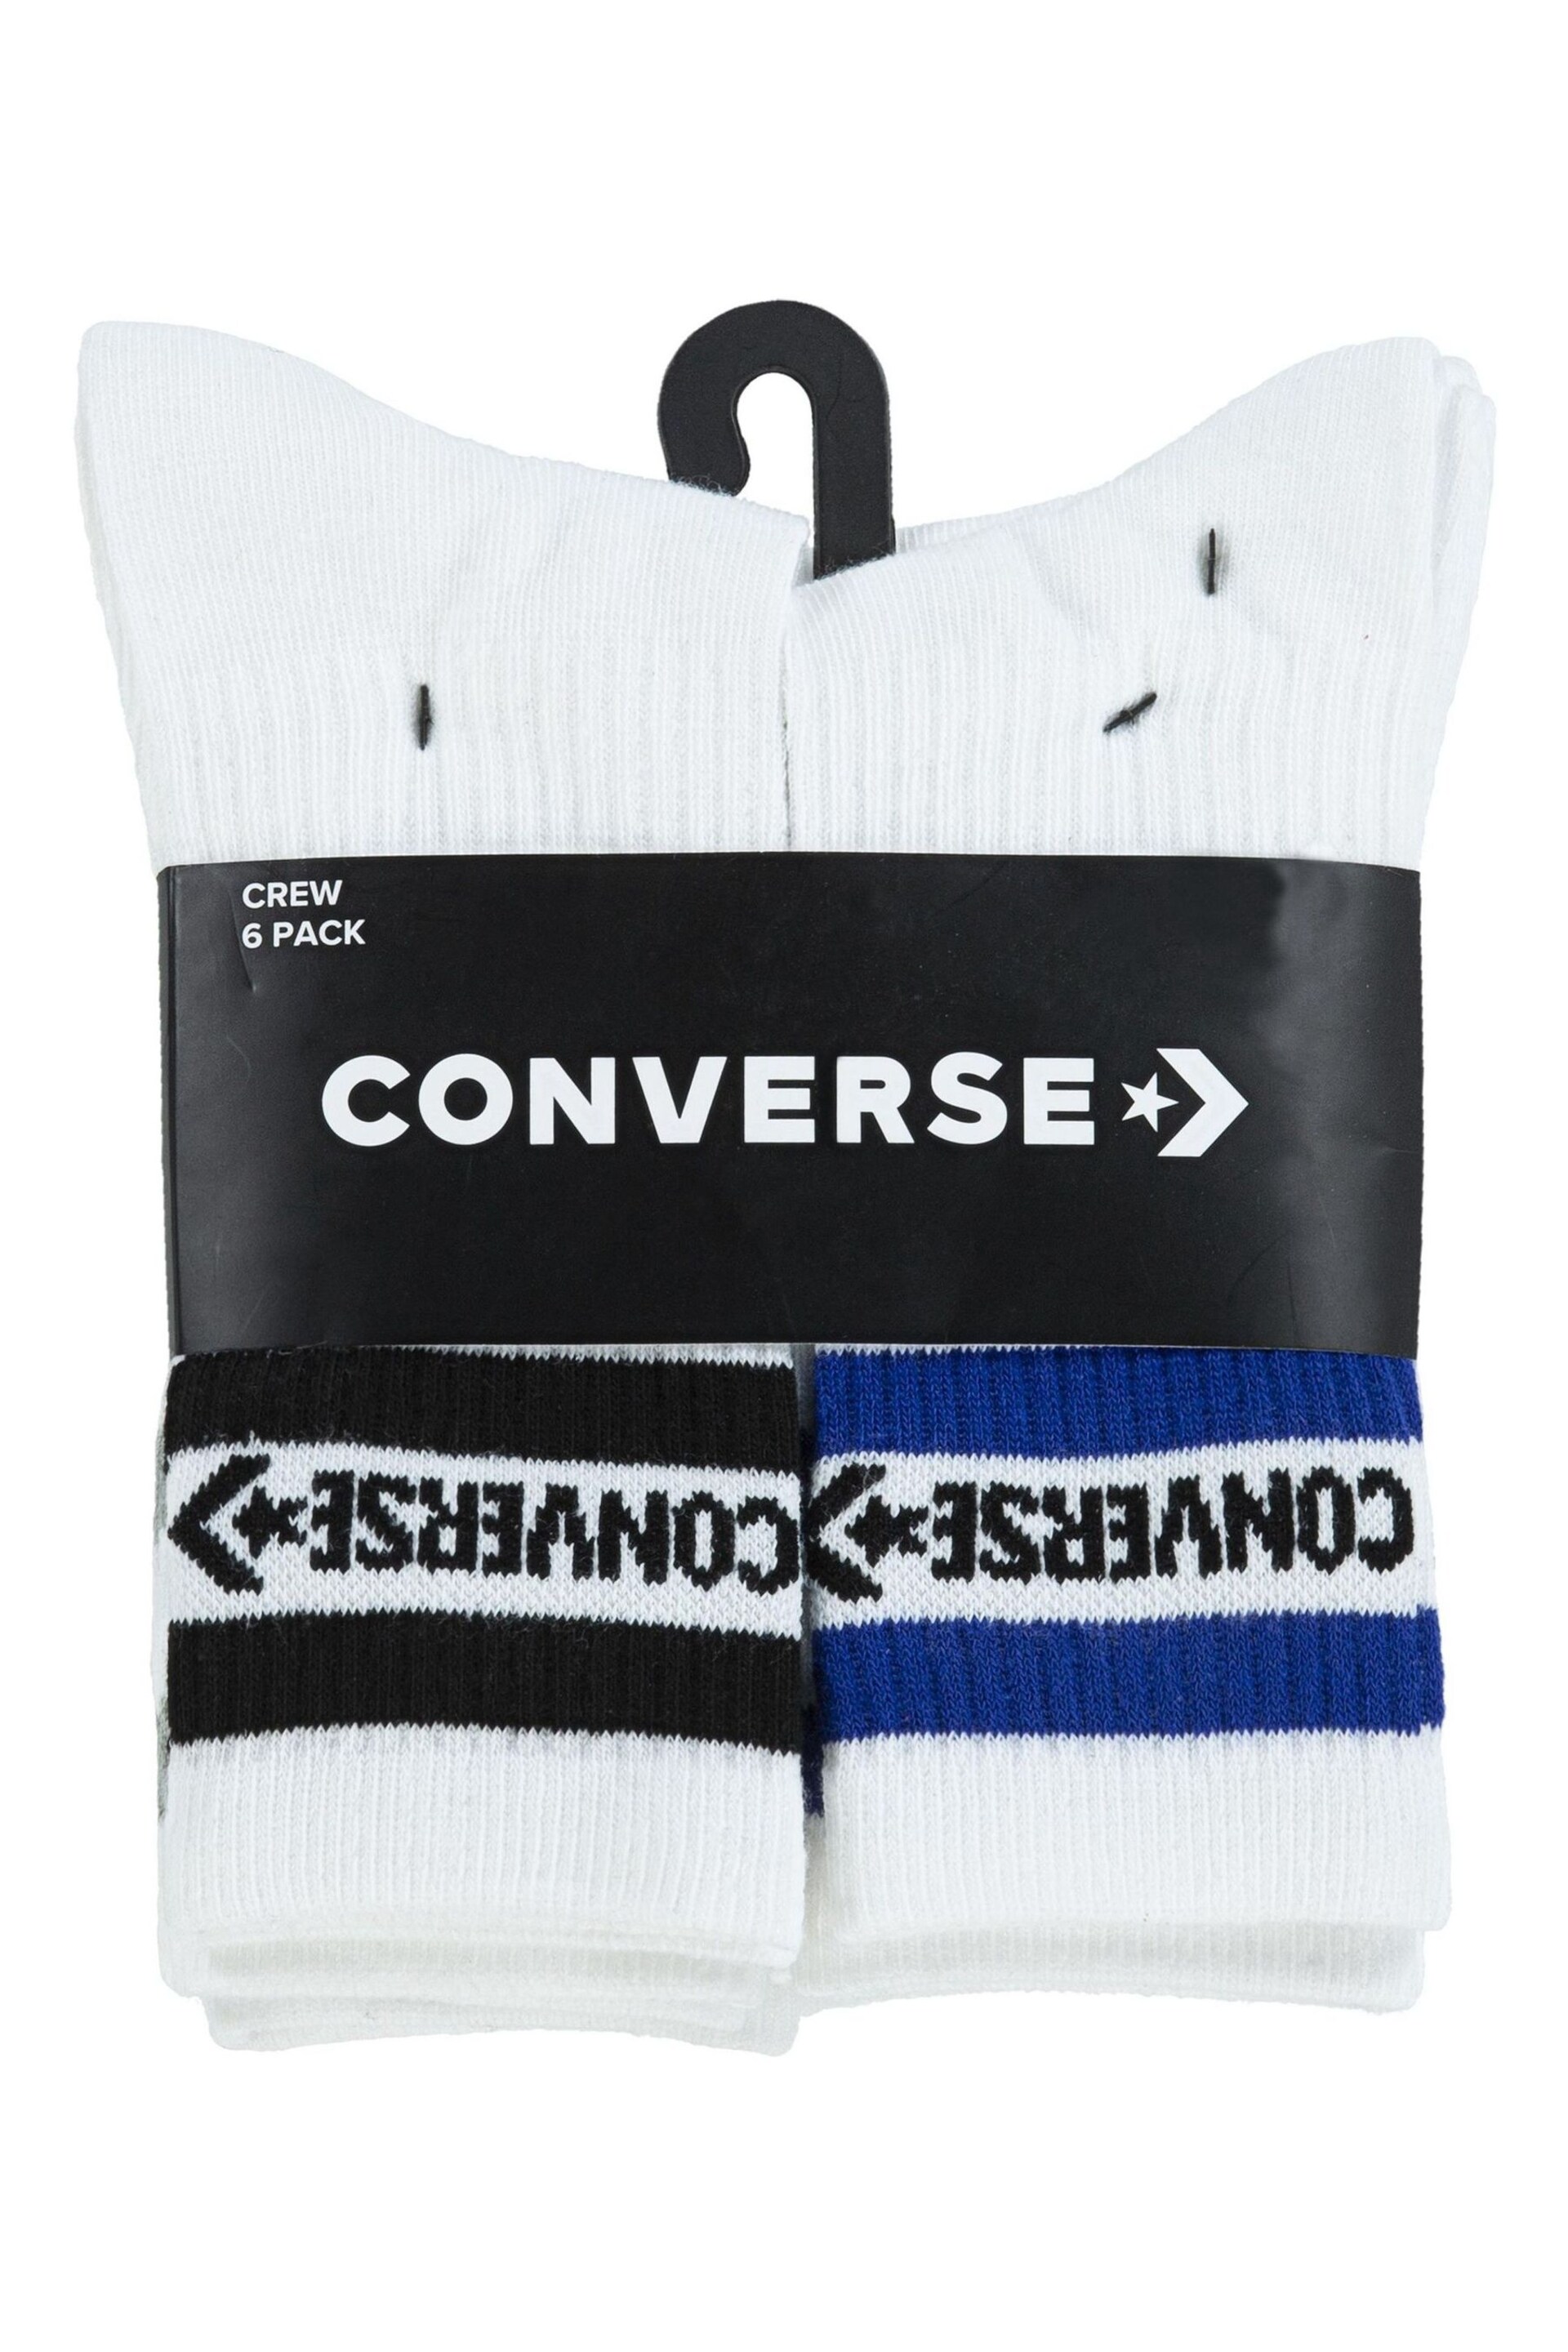 Converse Grey Basic Wordmark Crew Socks 6 Pack - Image 4 of 4